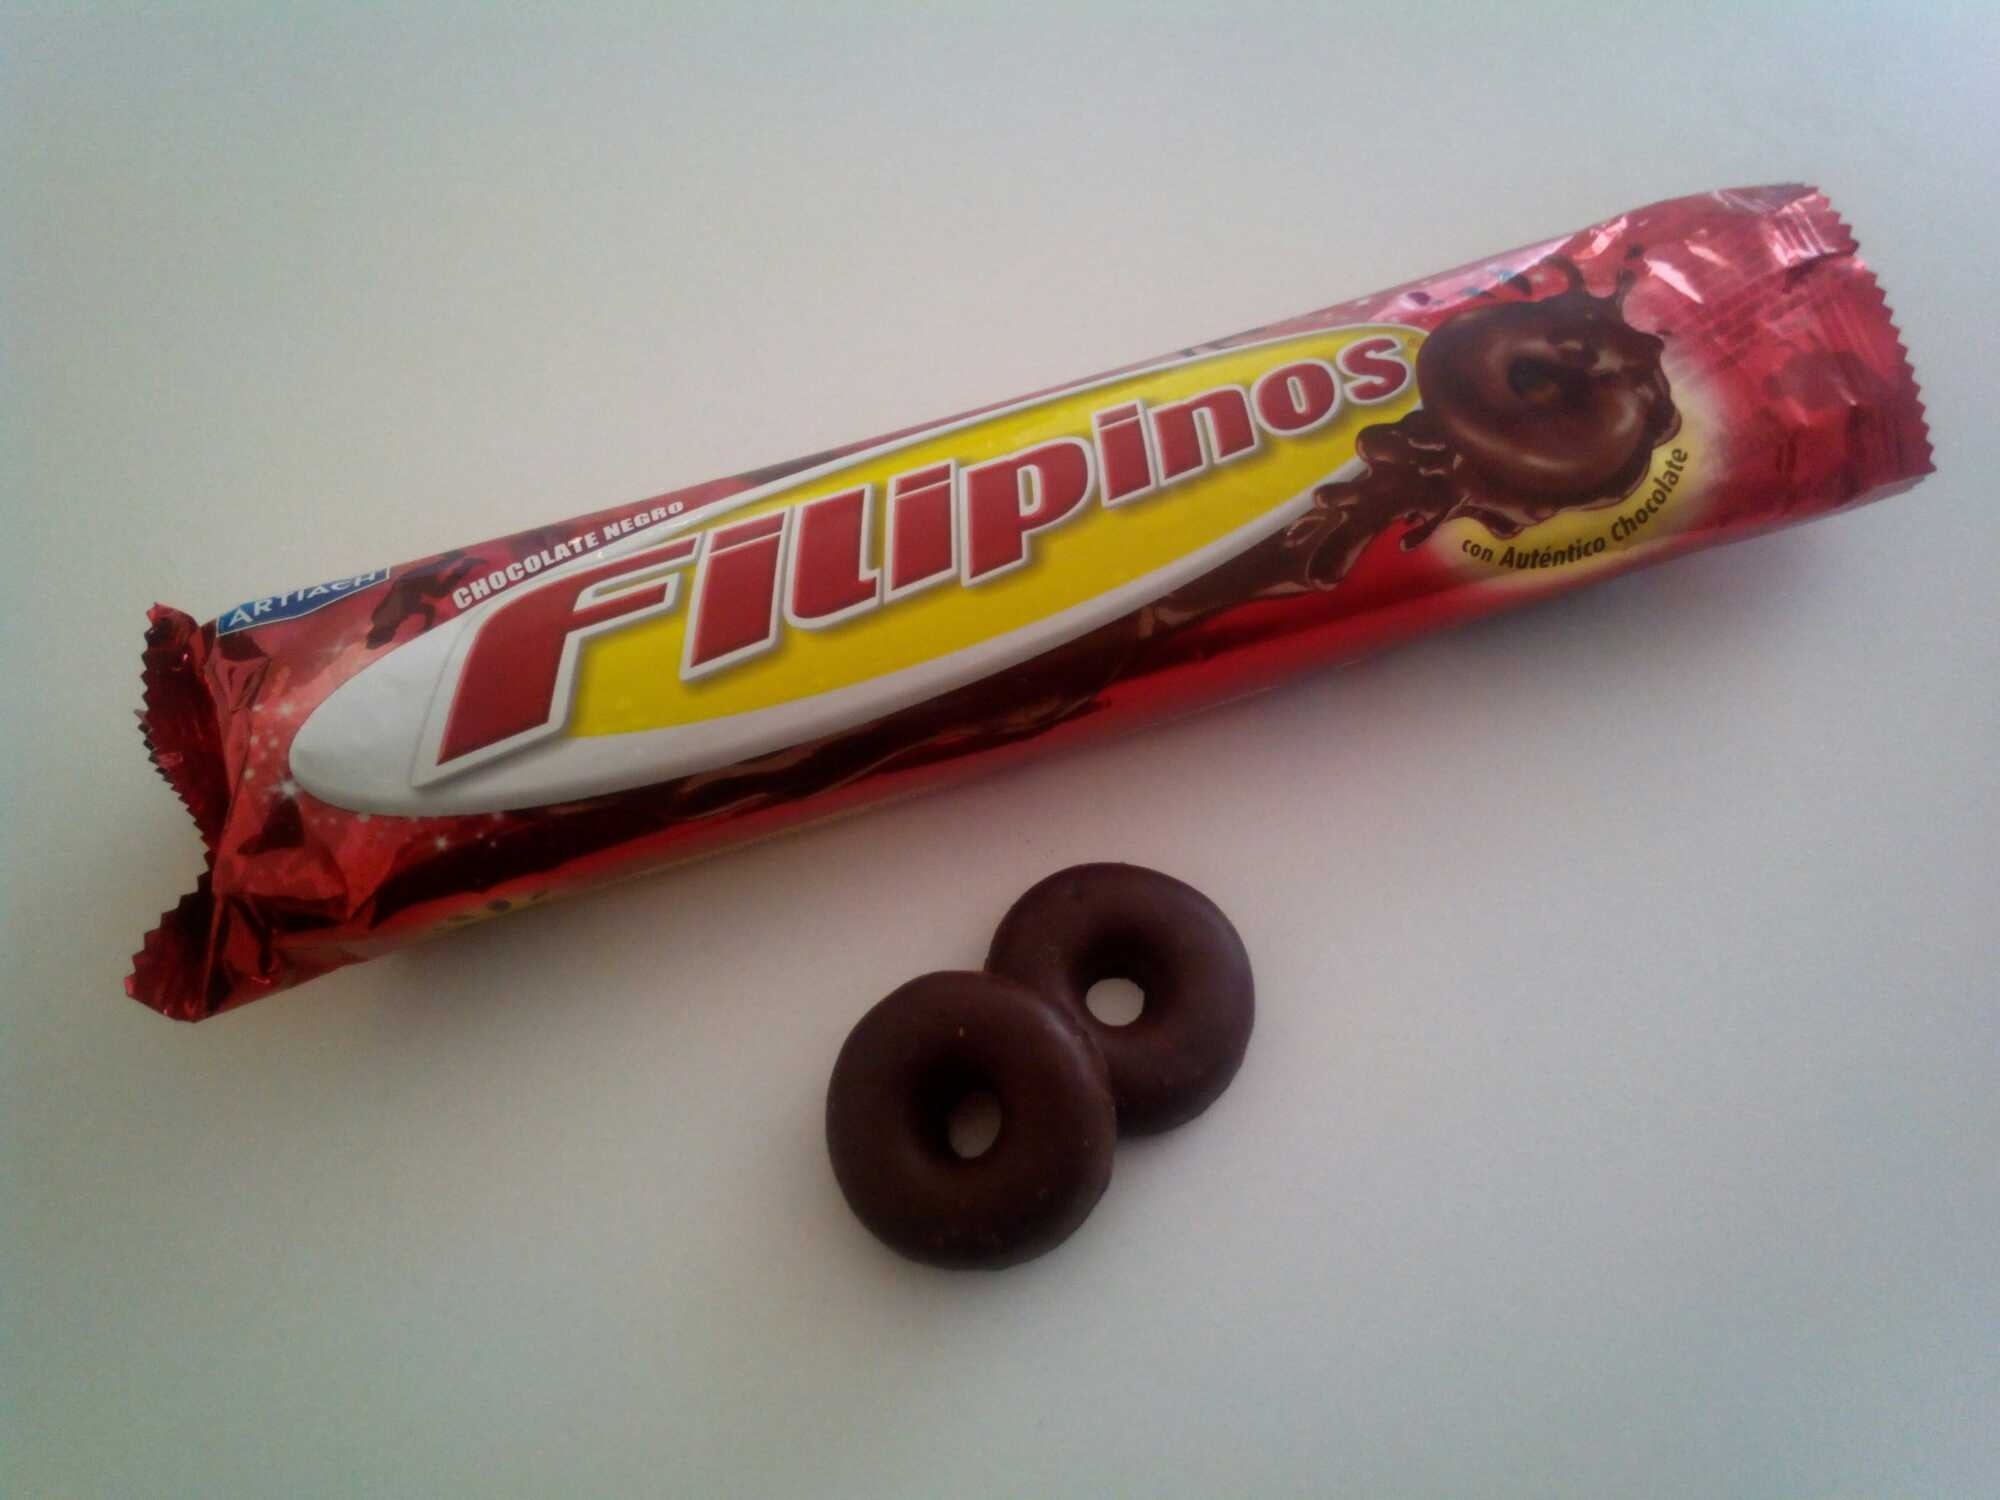 Filipinos chocolate negro - Produto - en